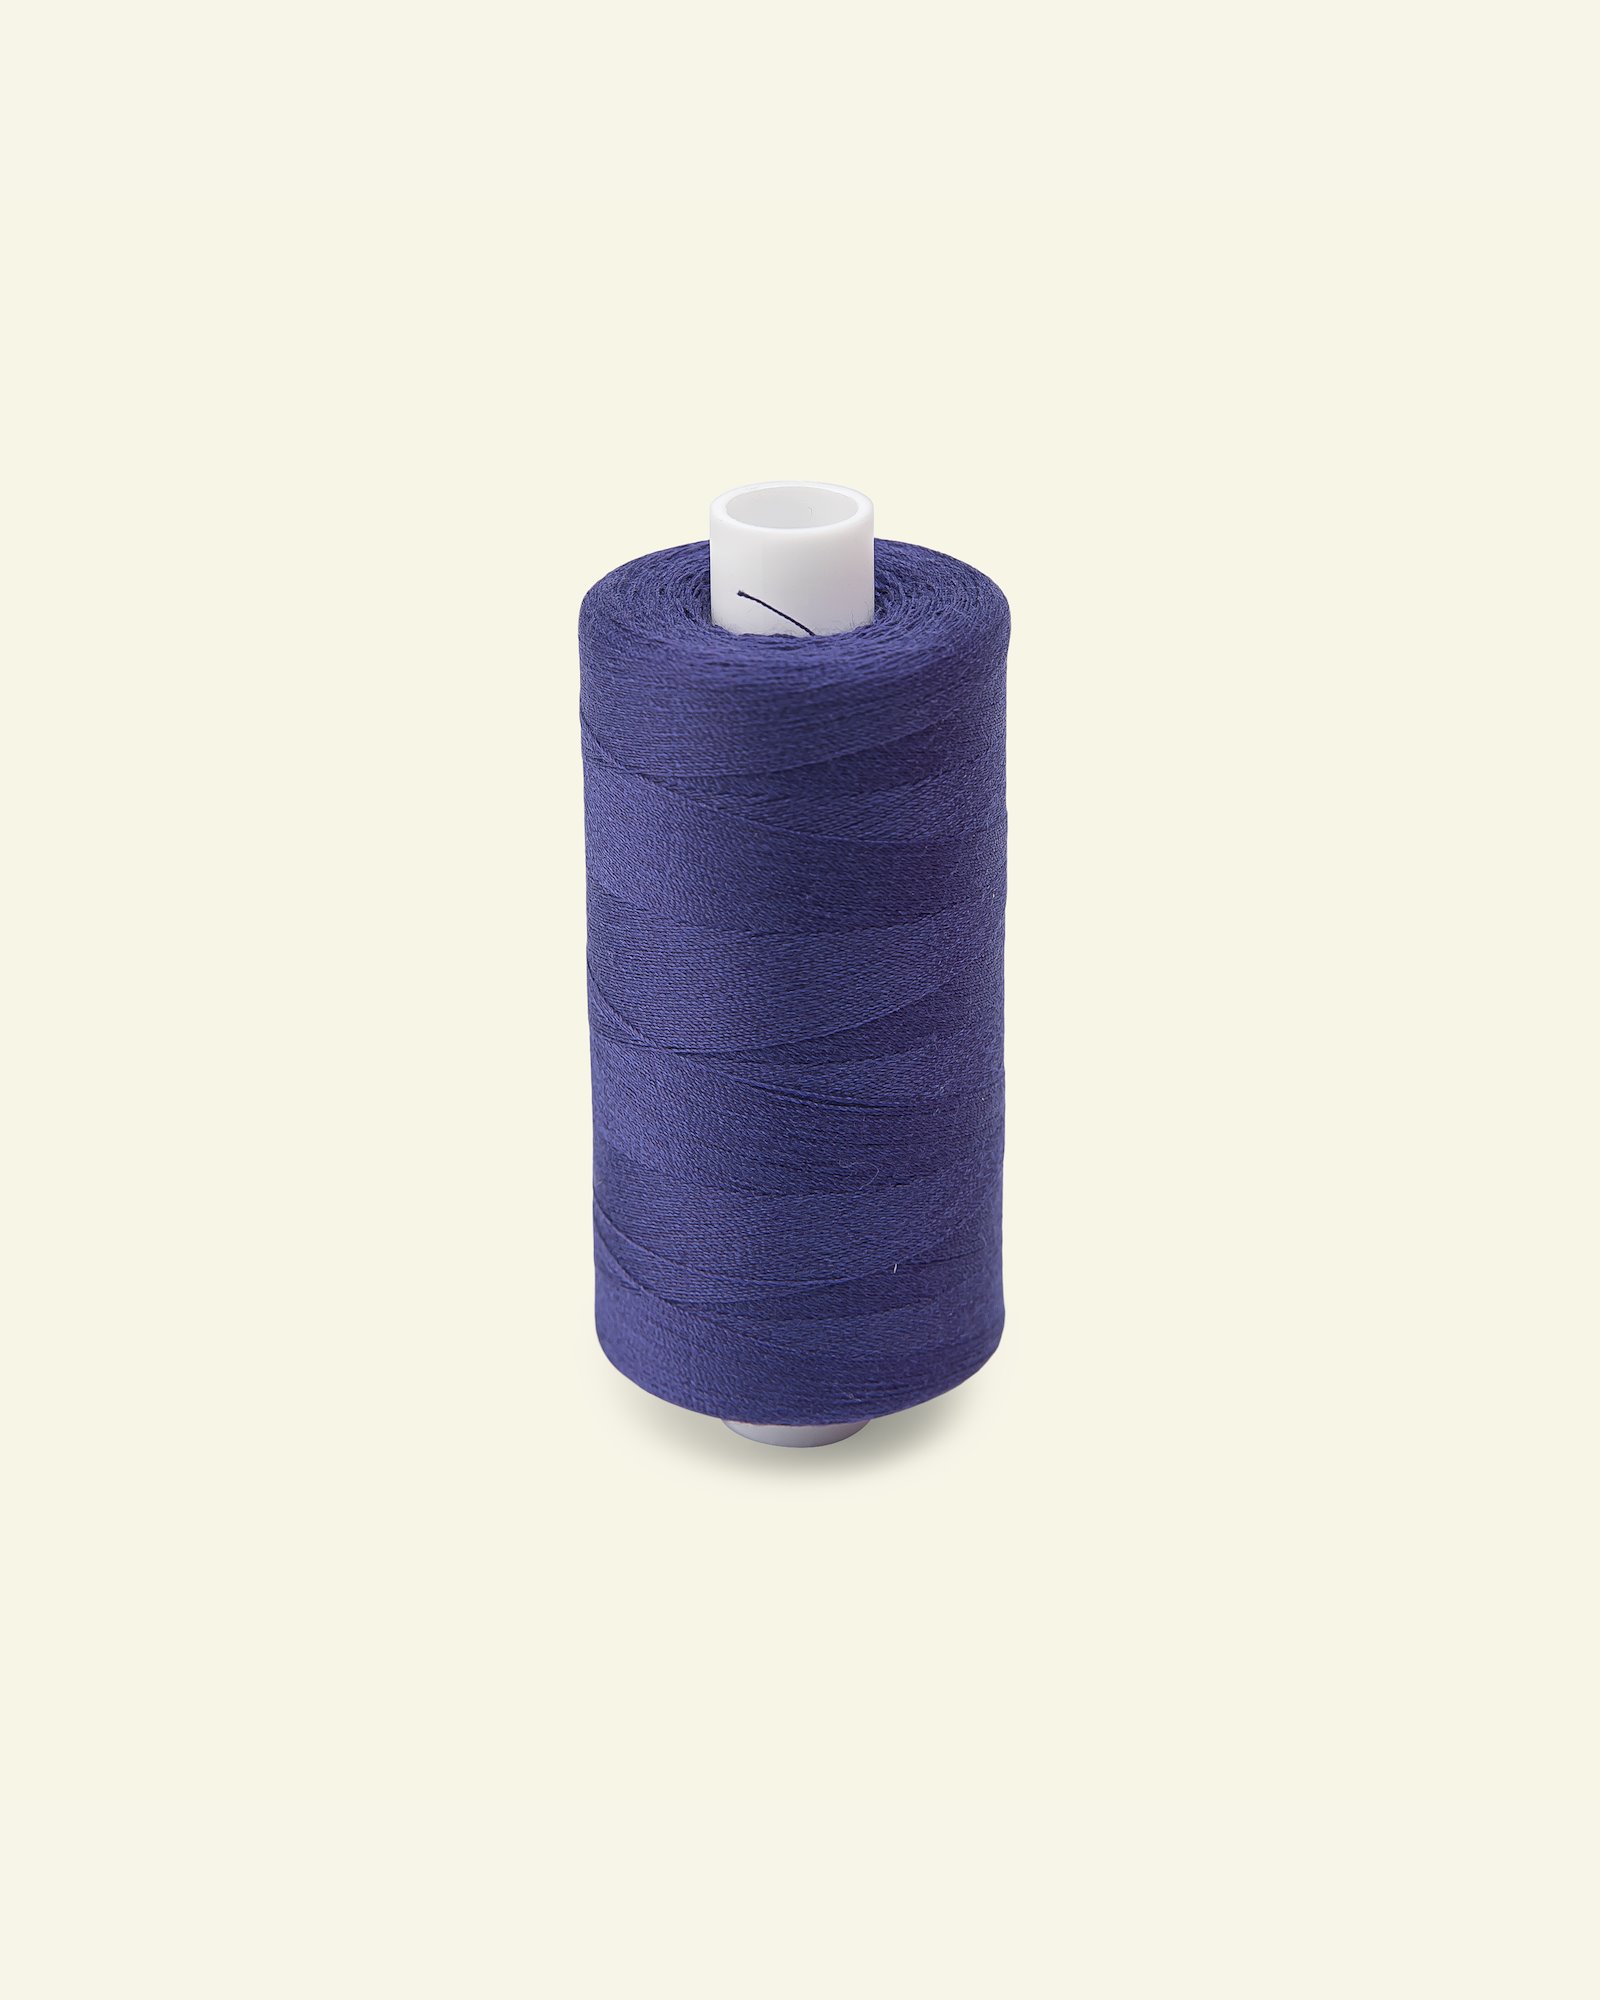 Sewing thread bluepurple 1000m 12102_pack